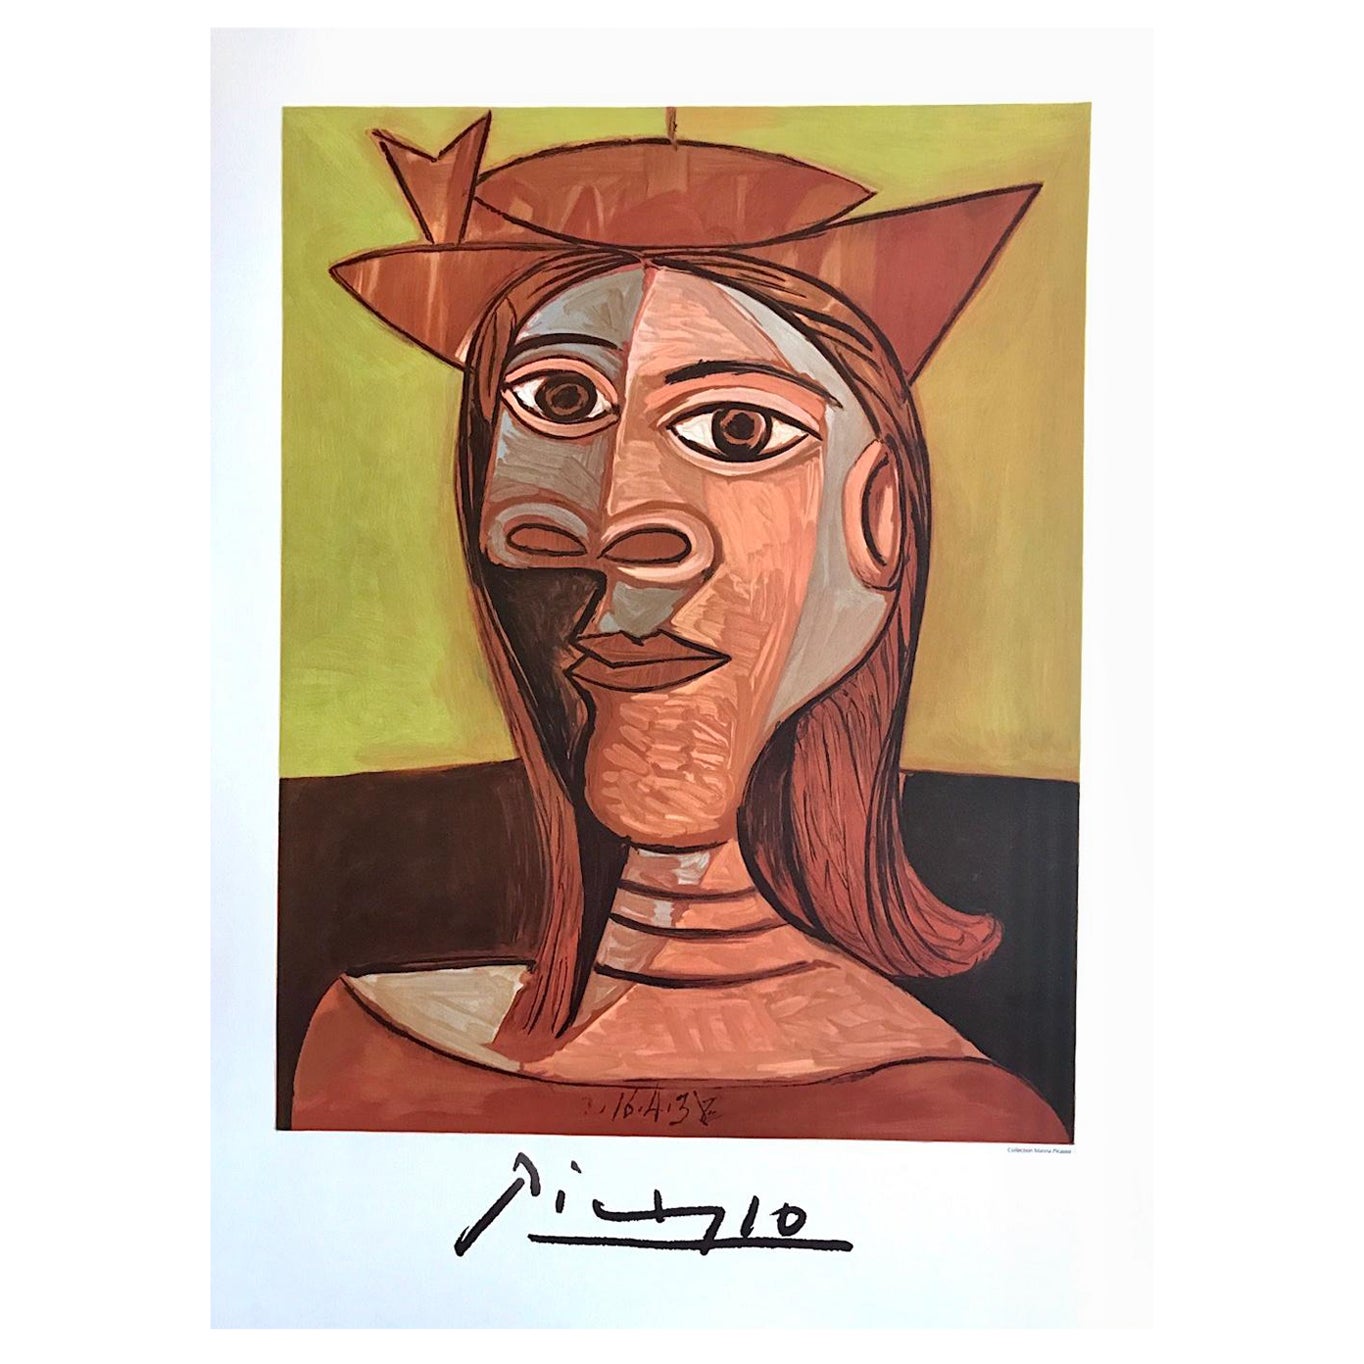 (after) Pablo Picasso Abstract Print – Tete de Femme, Lithographie, Abstrakter Porträtkopf, Frau mit Hut aus Terrakotta in Rosa